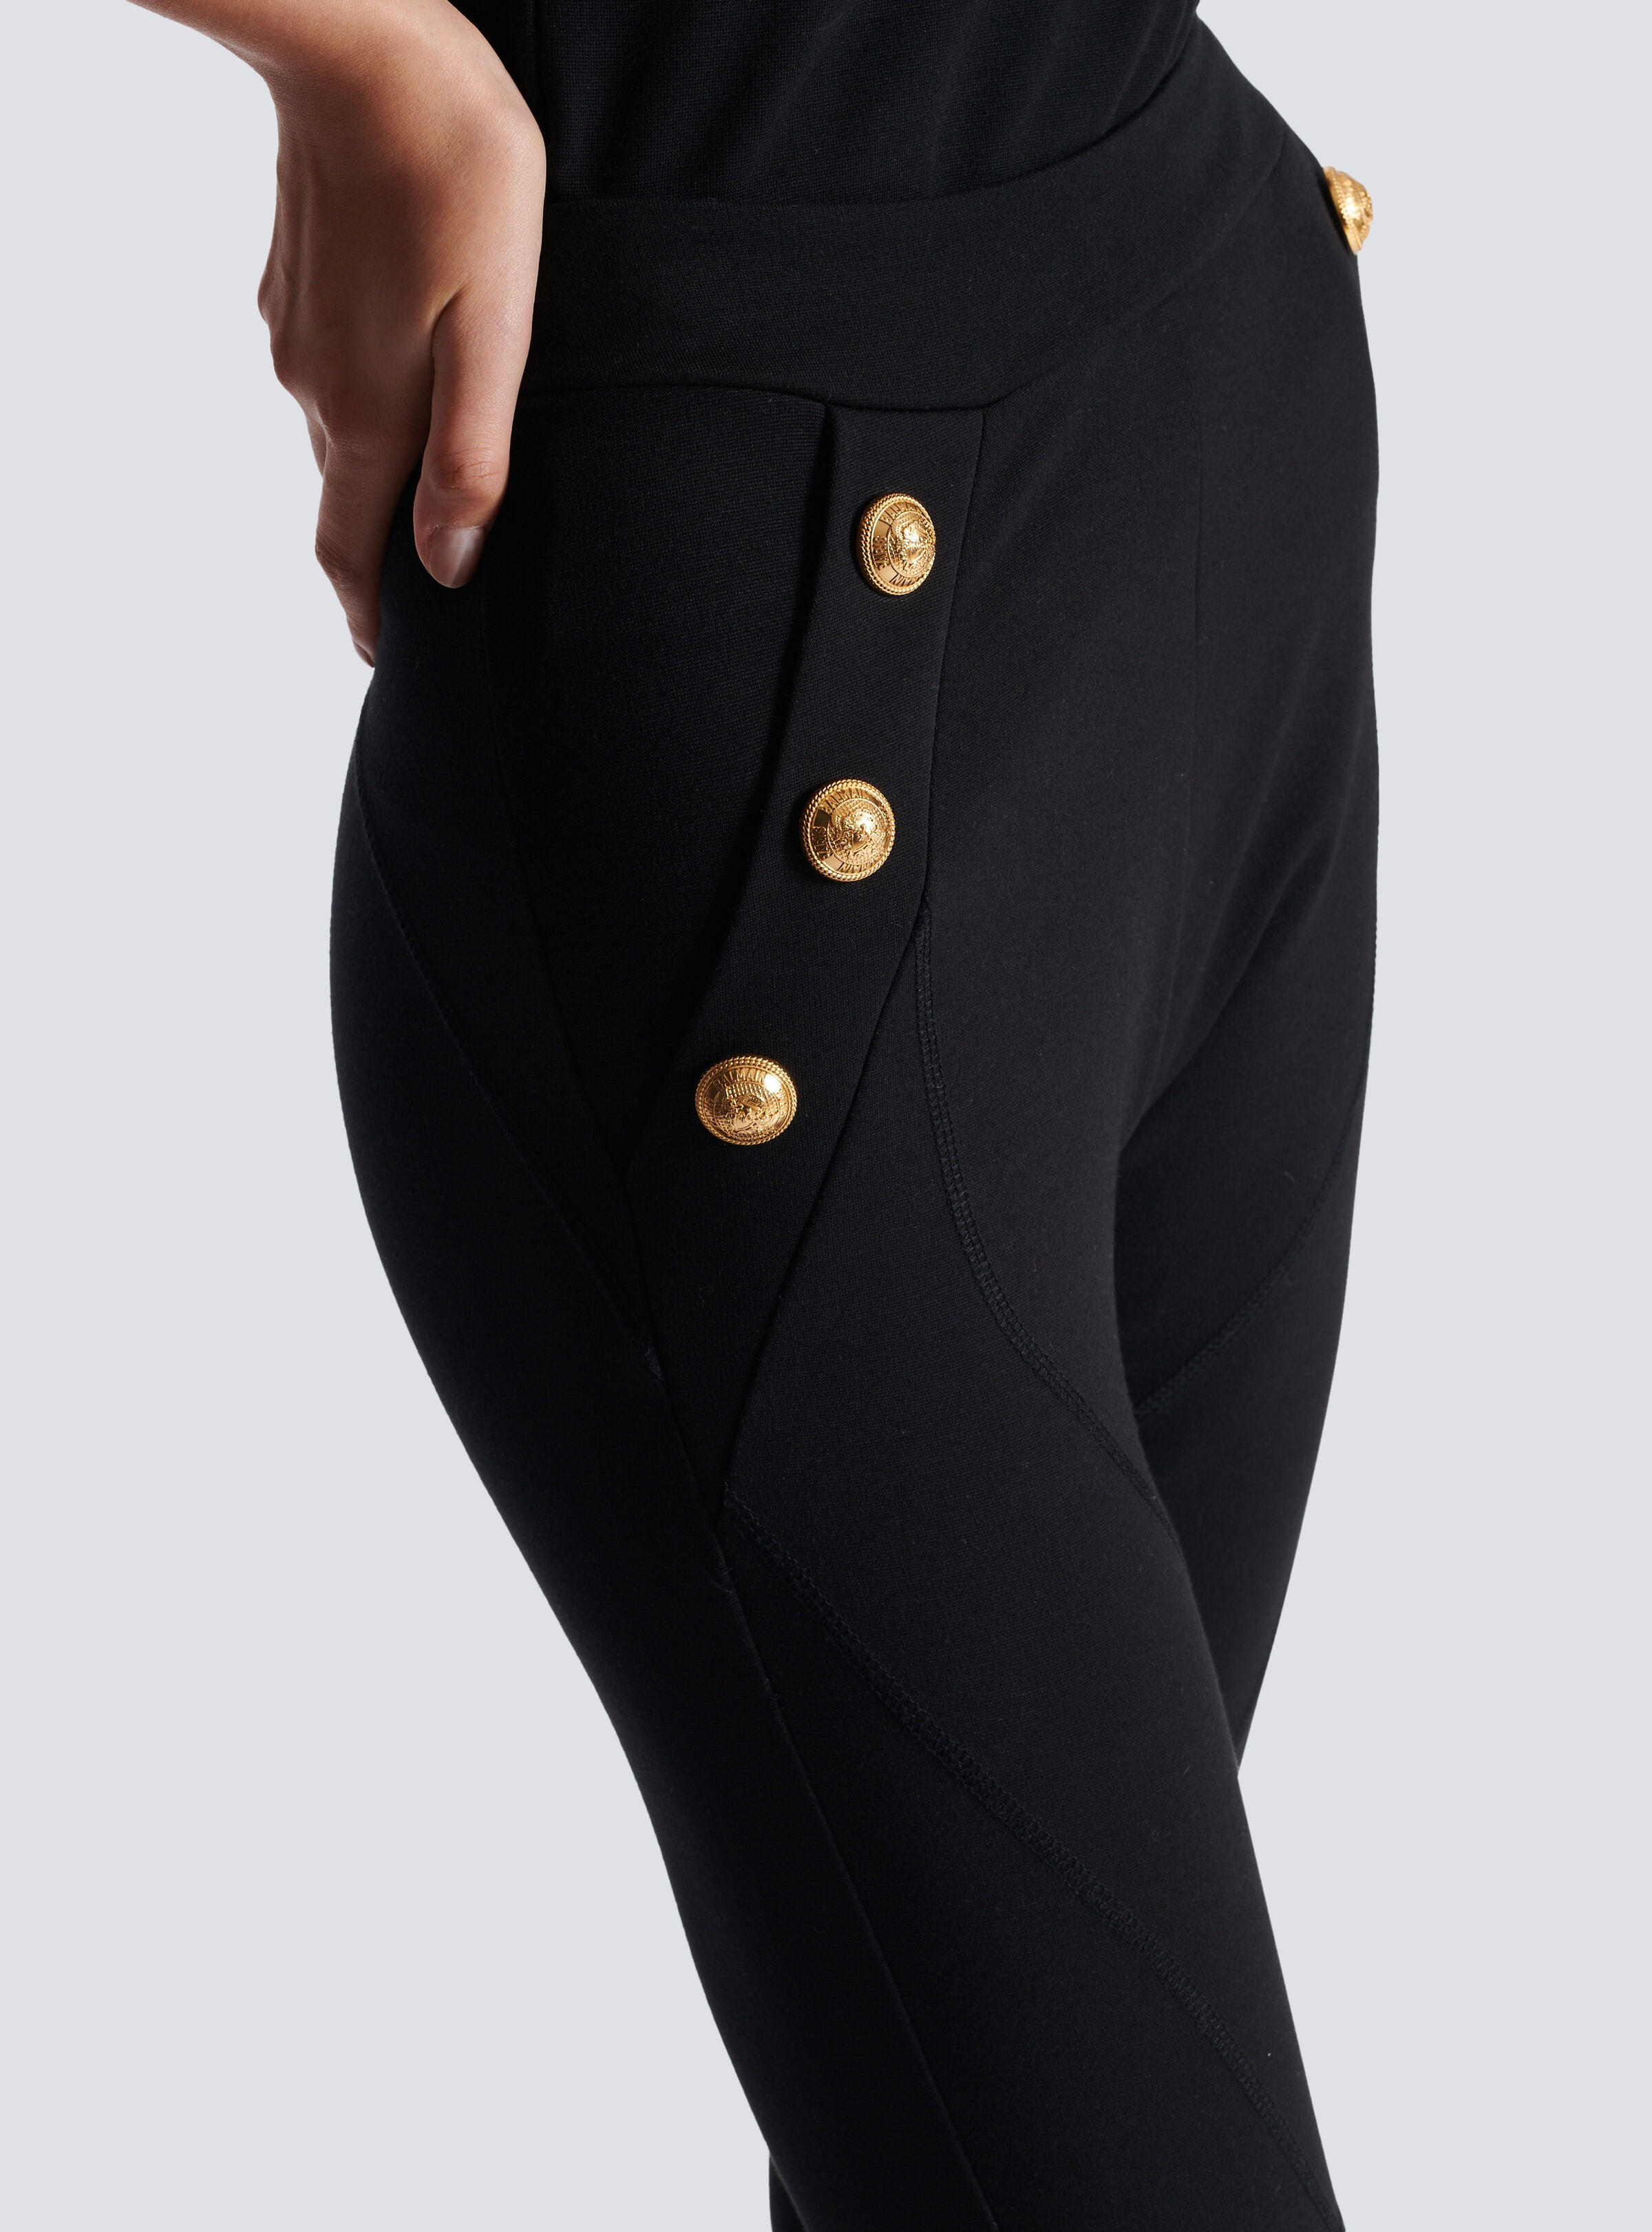 Stirrup cotton-blend leggings in black - Balmain